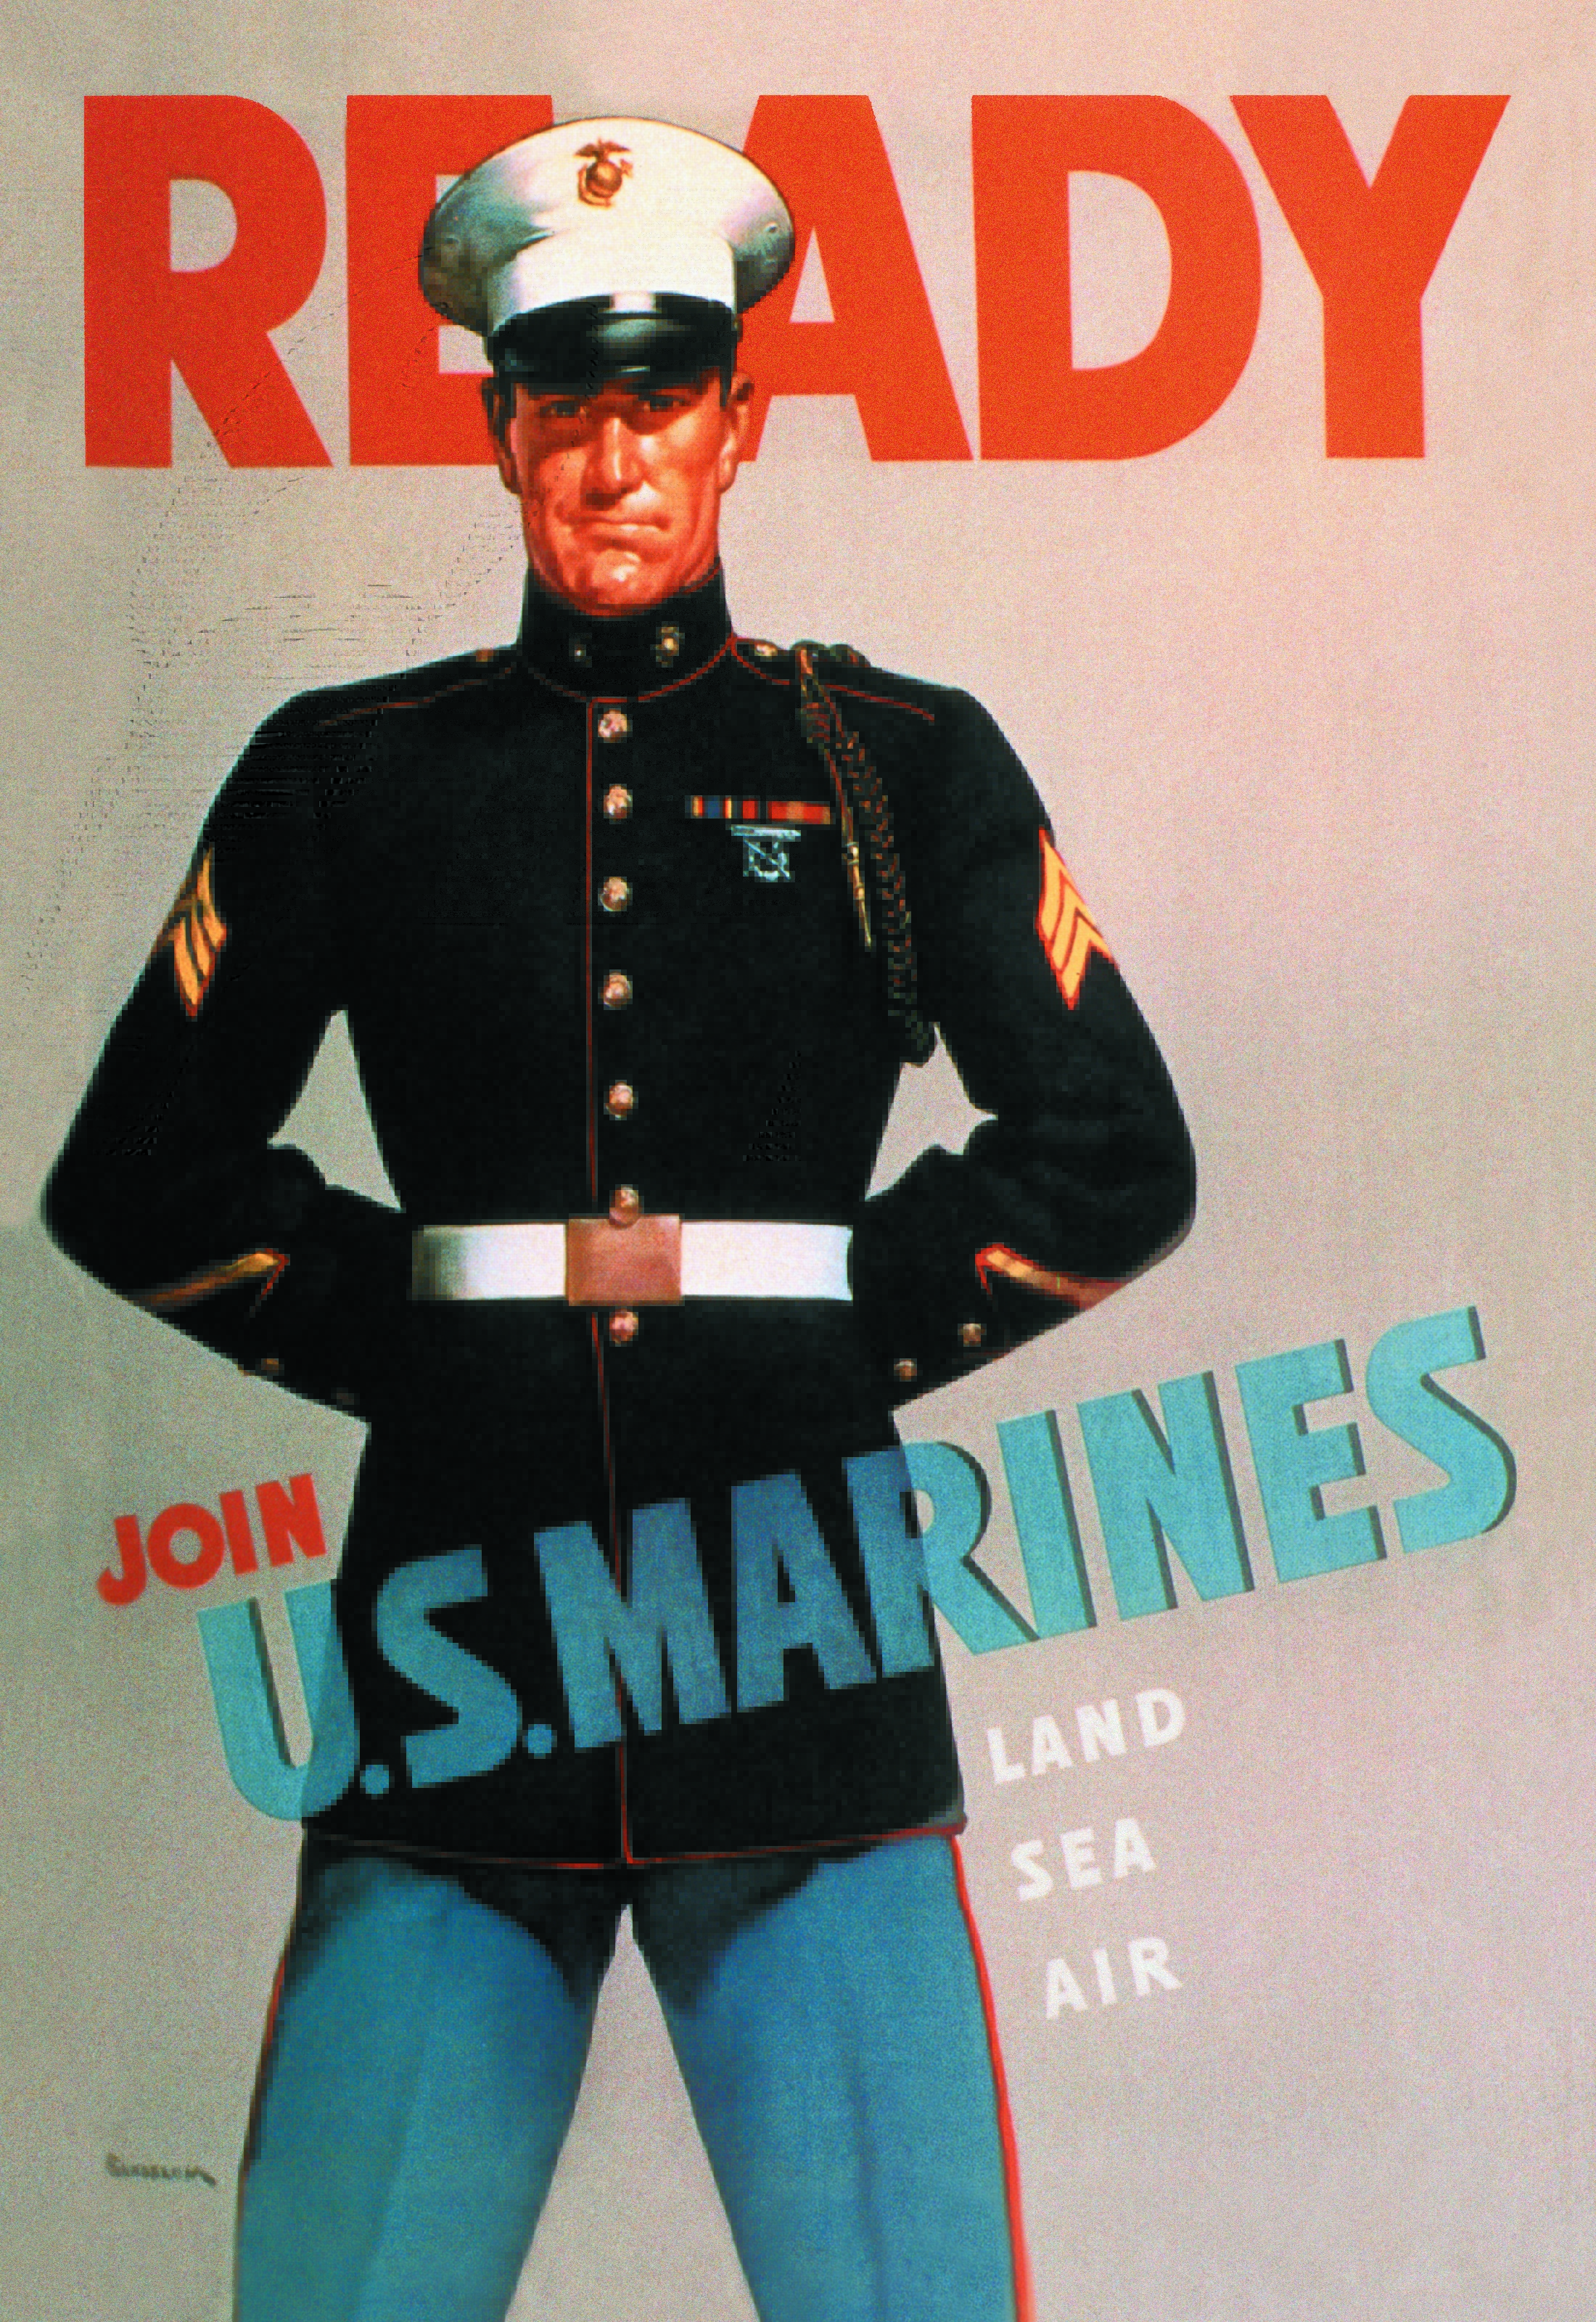 Ready: Join U.S. Marines